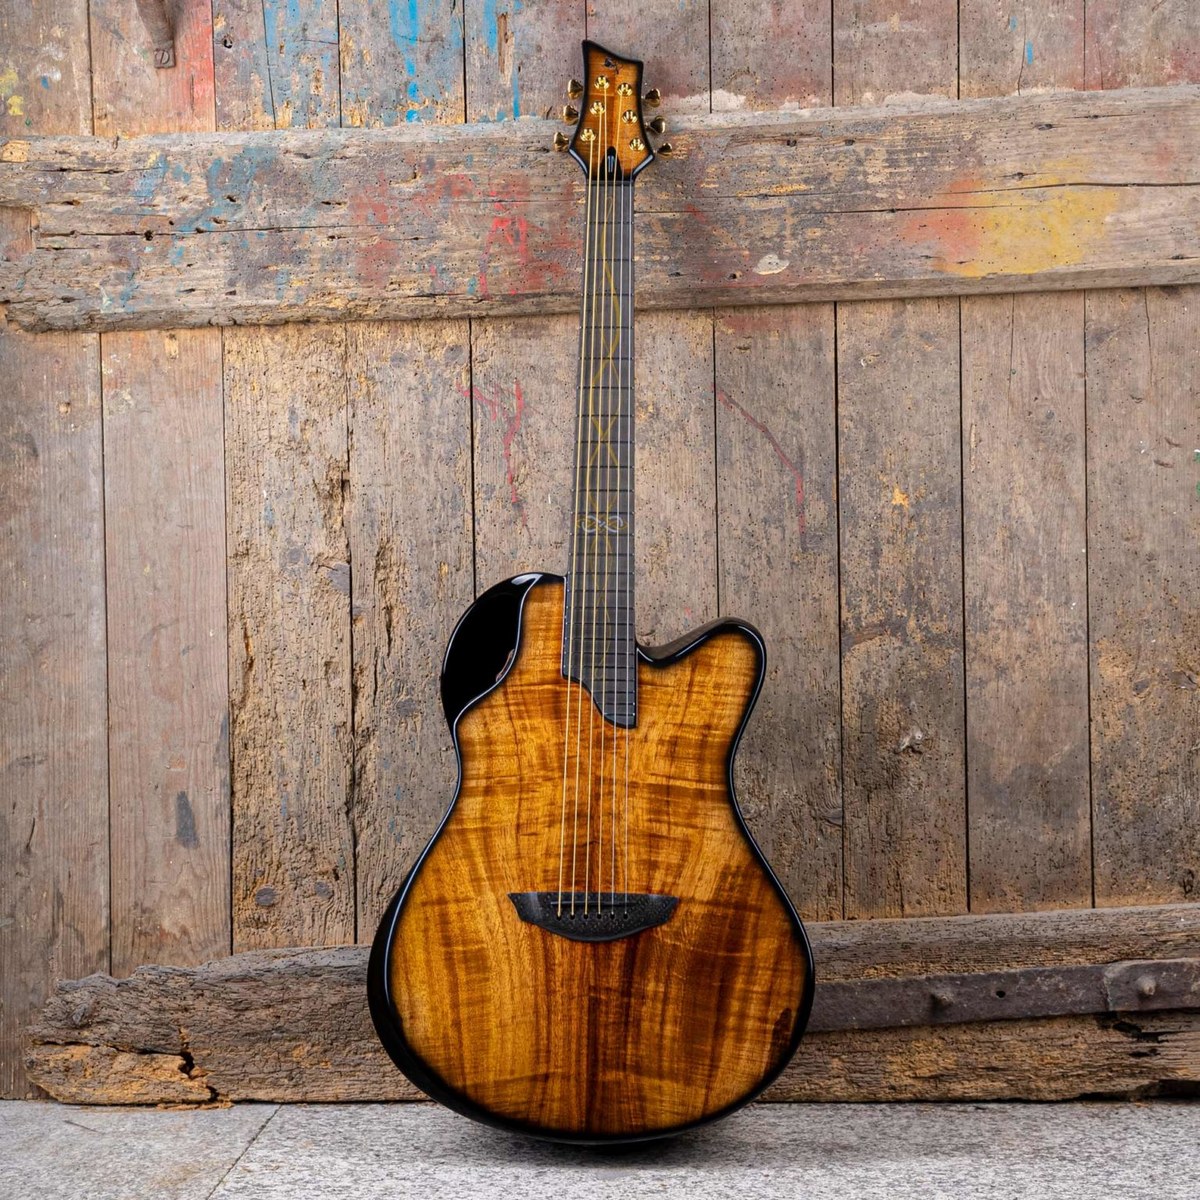 Emerald X20 guitar showcasing wood grain against textured backdrop